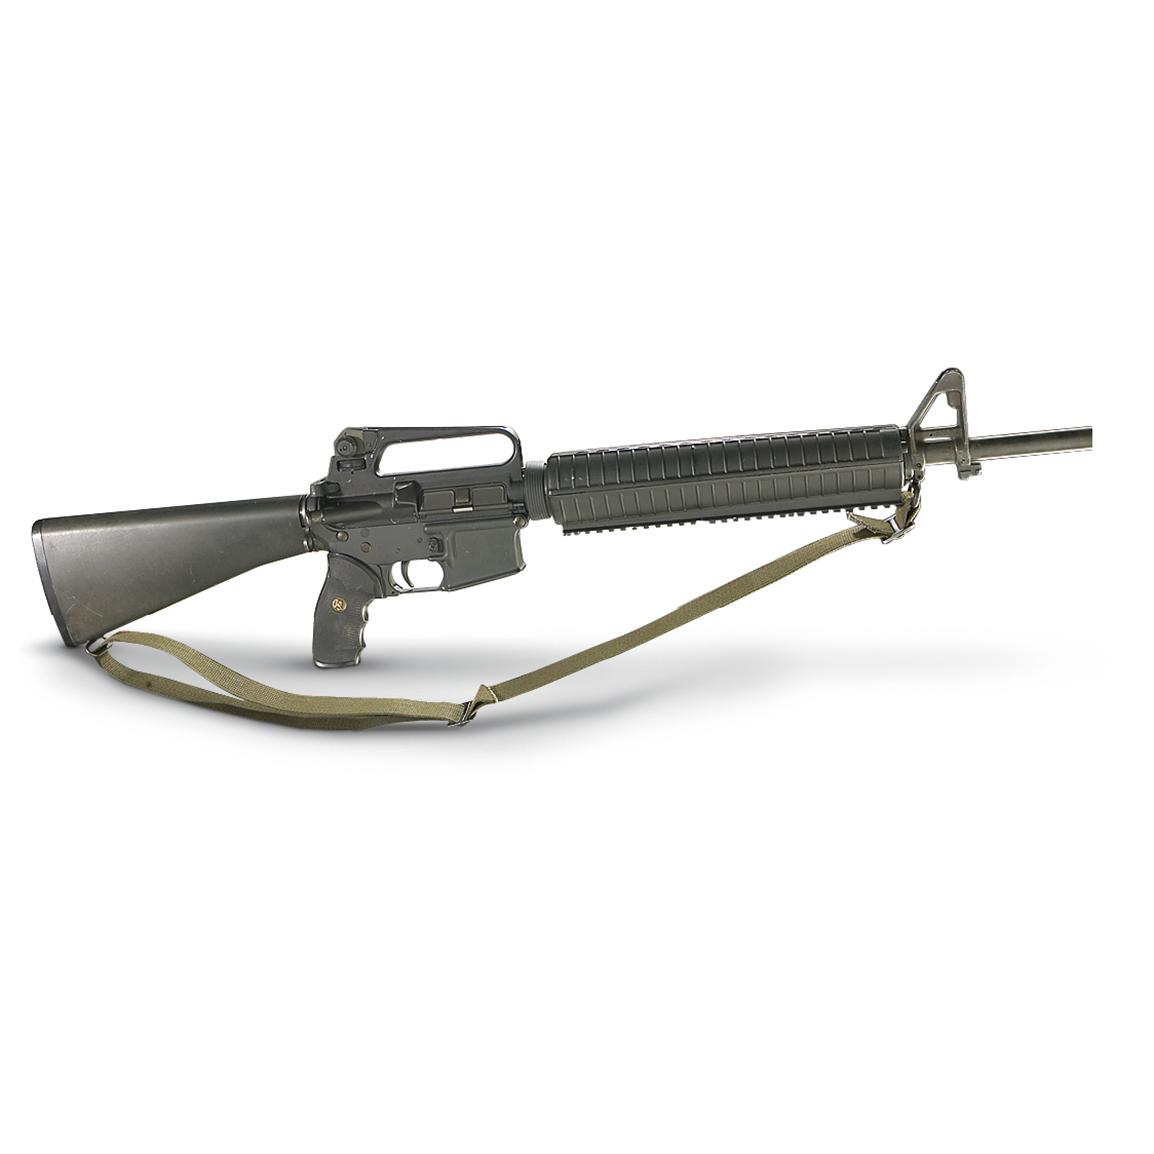 4 New U.S. Military M16 Silent Slings, Olive Drab - 172430, Gun Slings